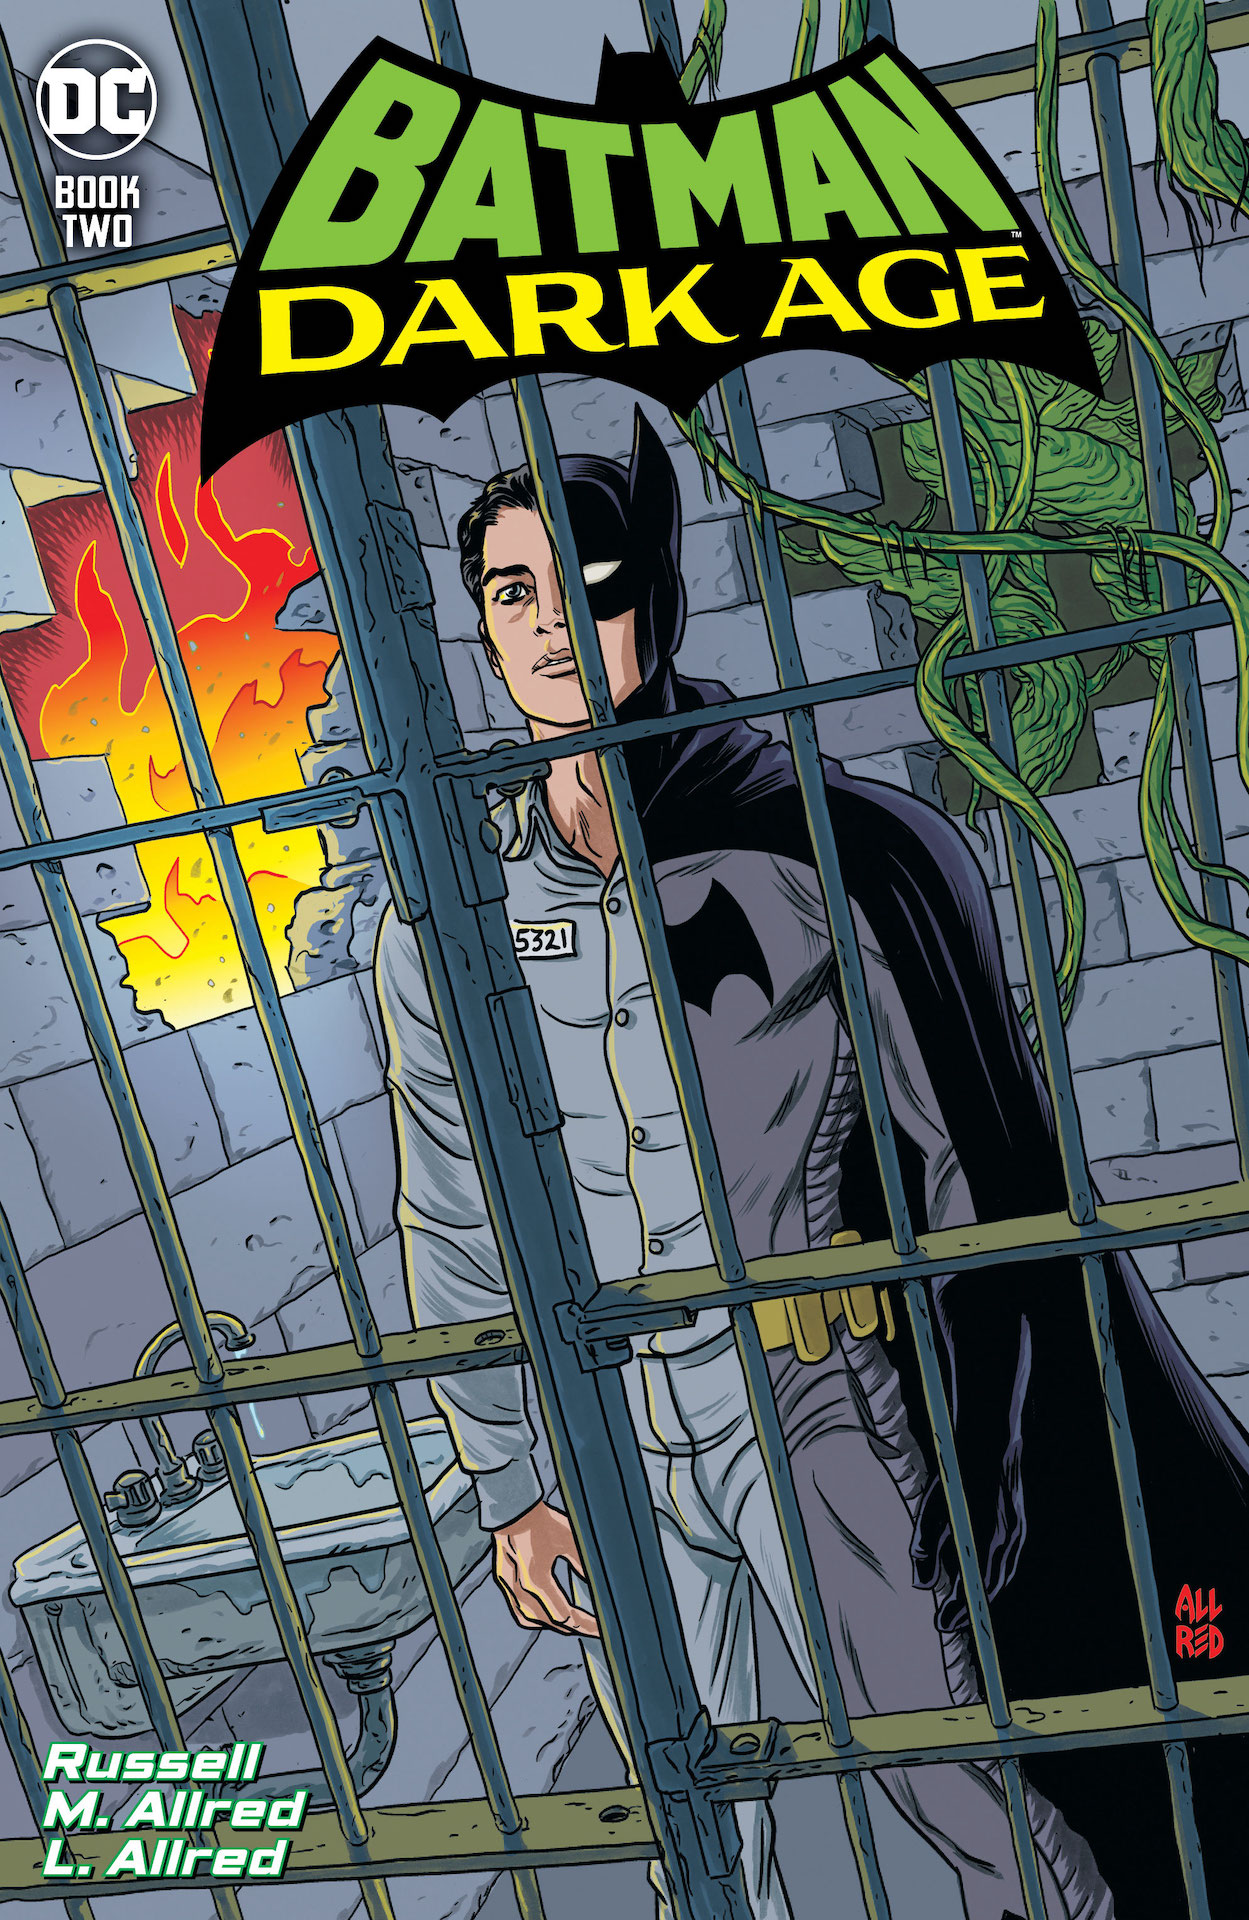 DC Preview: Batman: Dark Age #2